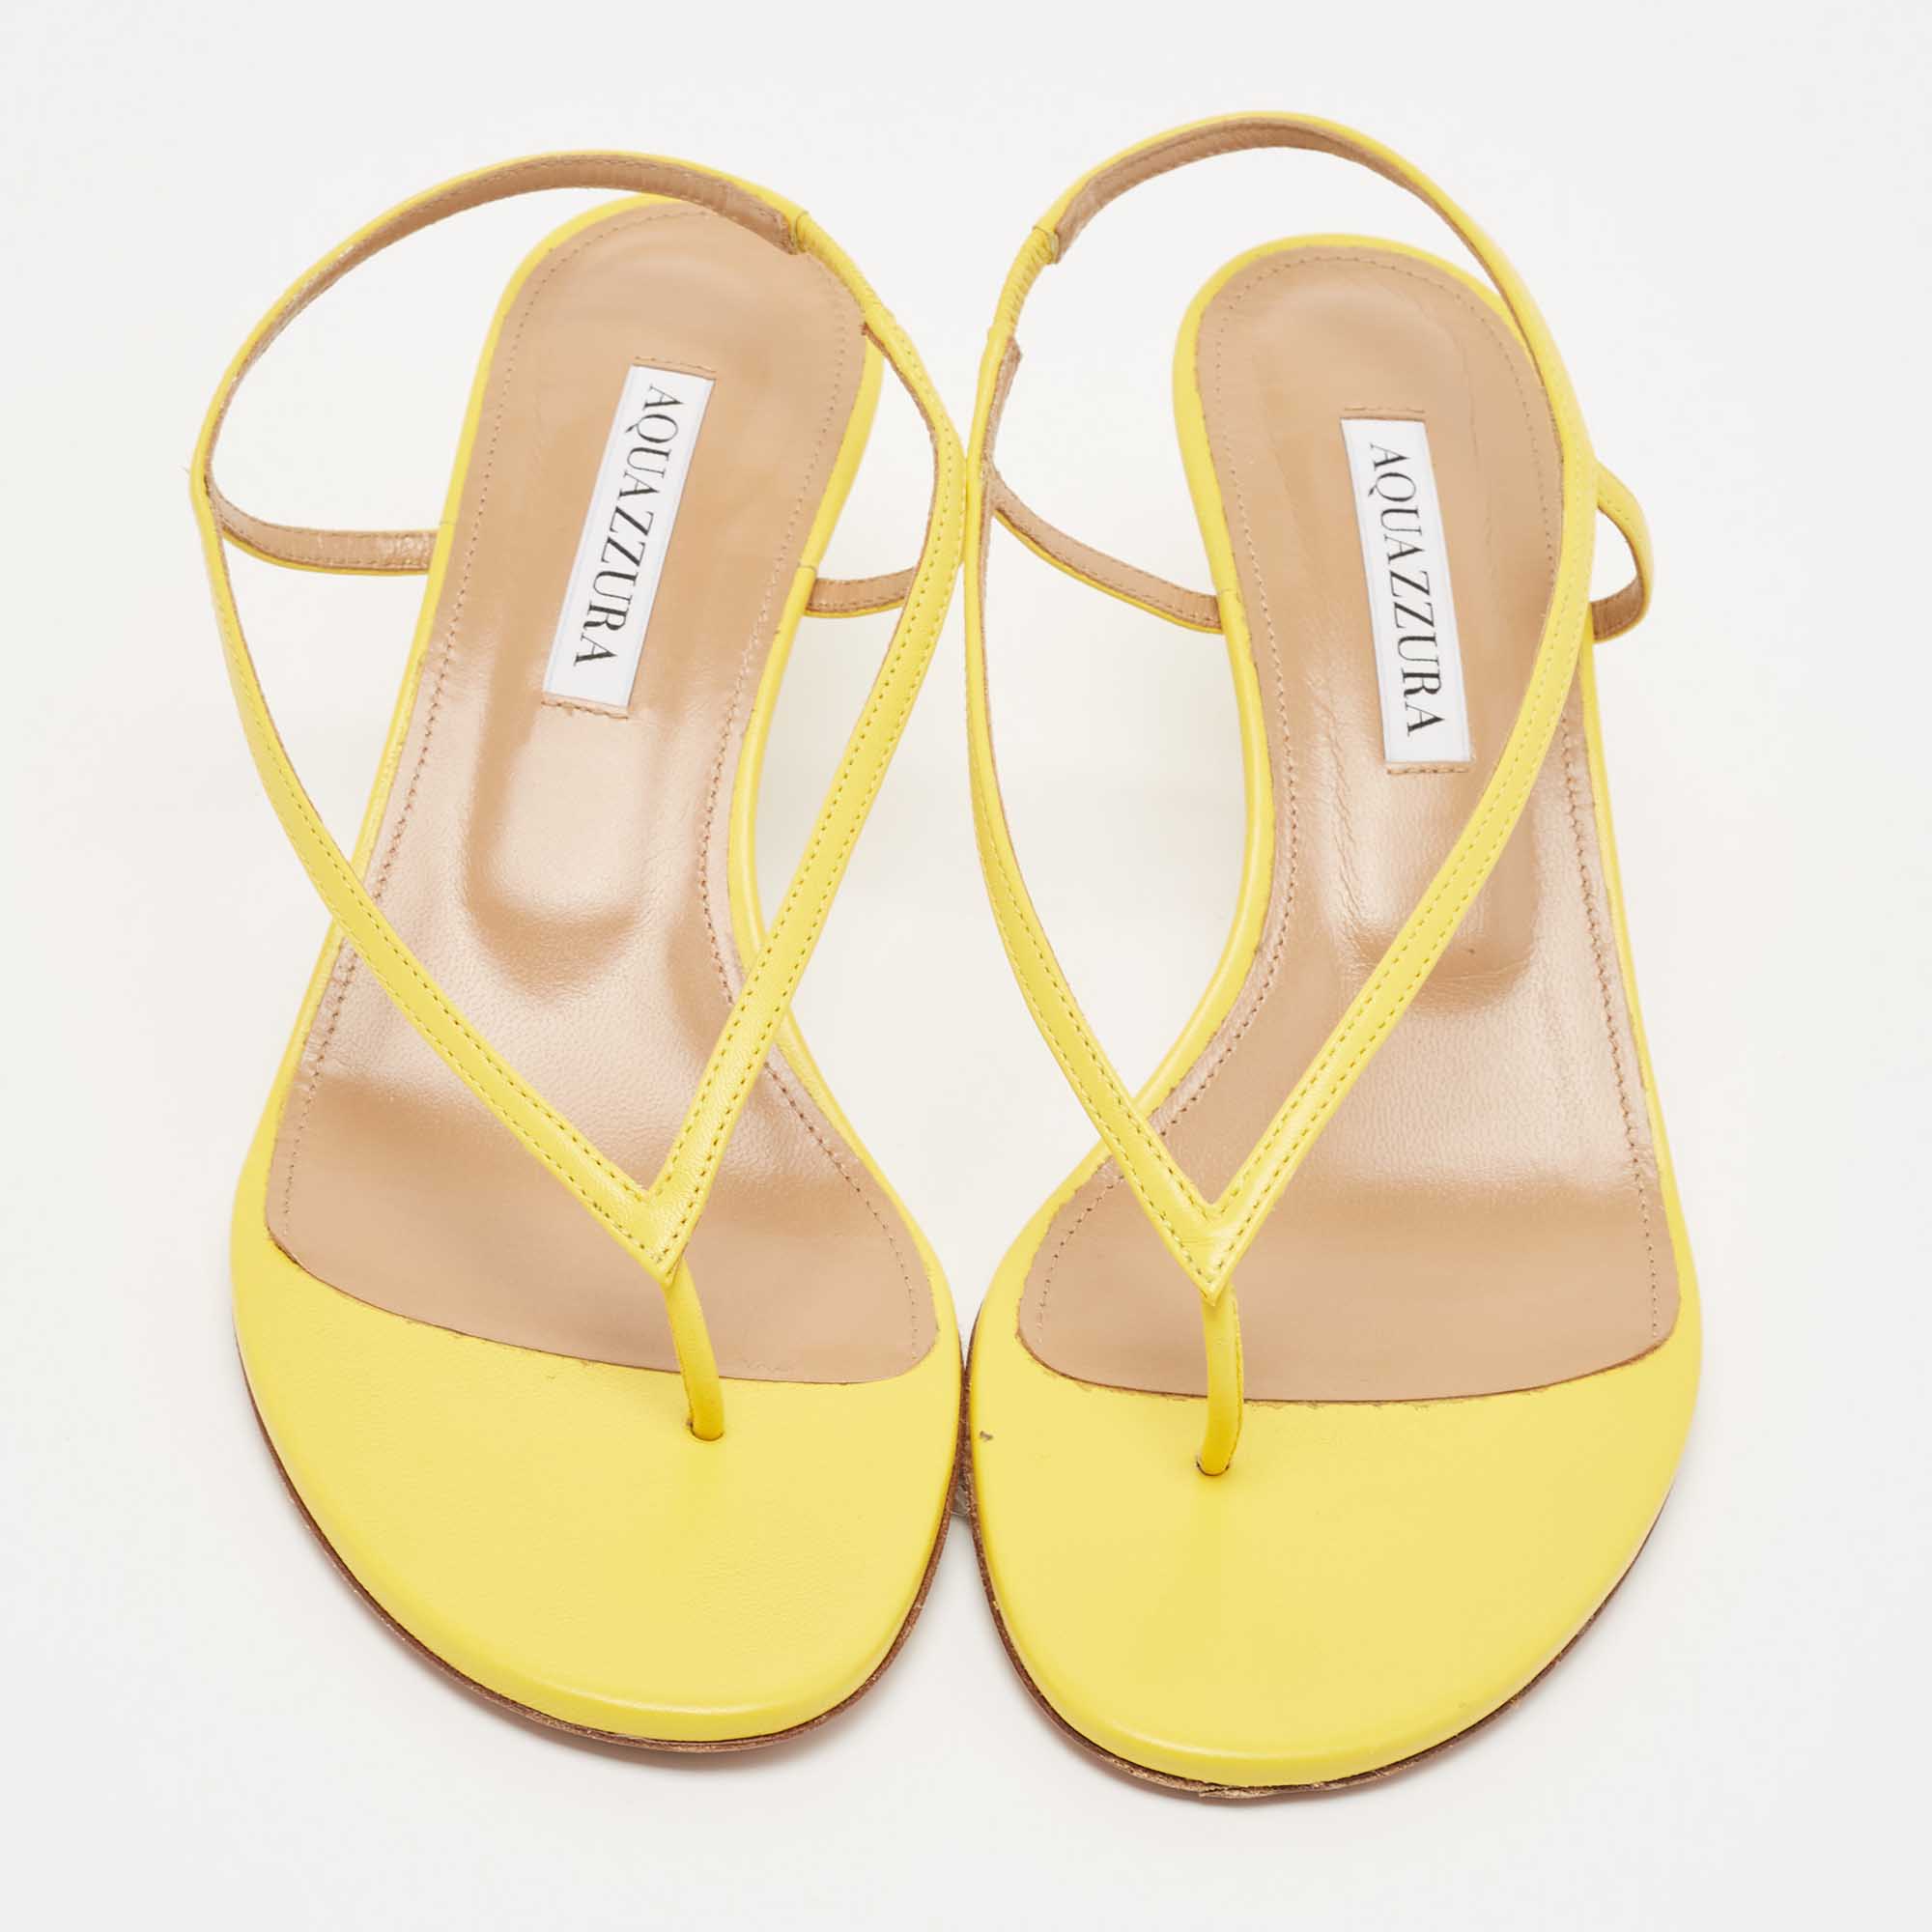 Aquazzura Yellow Leather Slingback Sandals Size 38